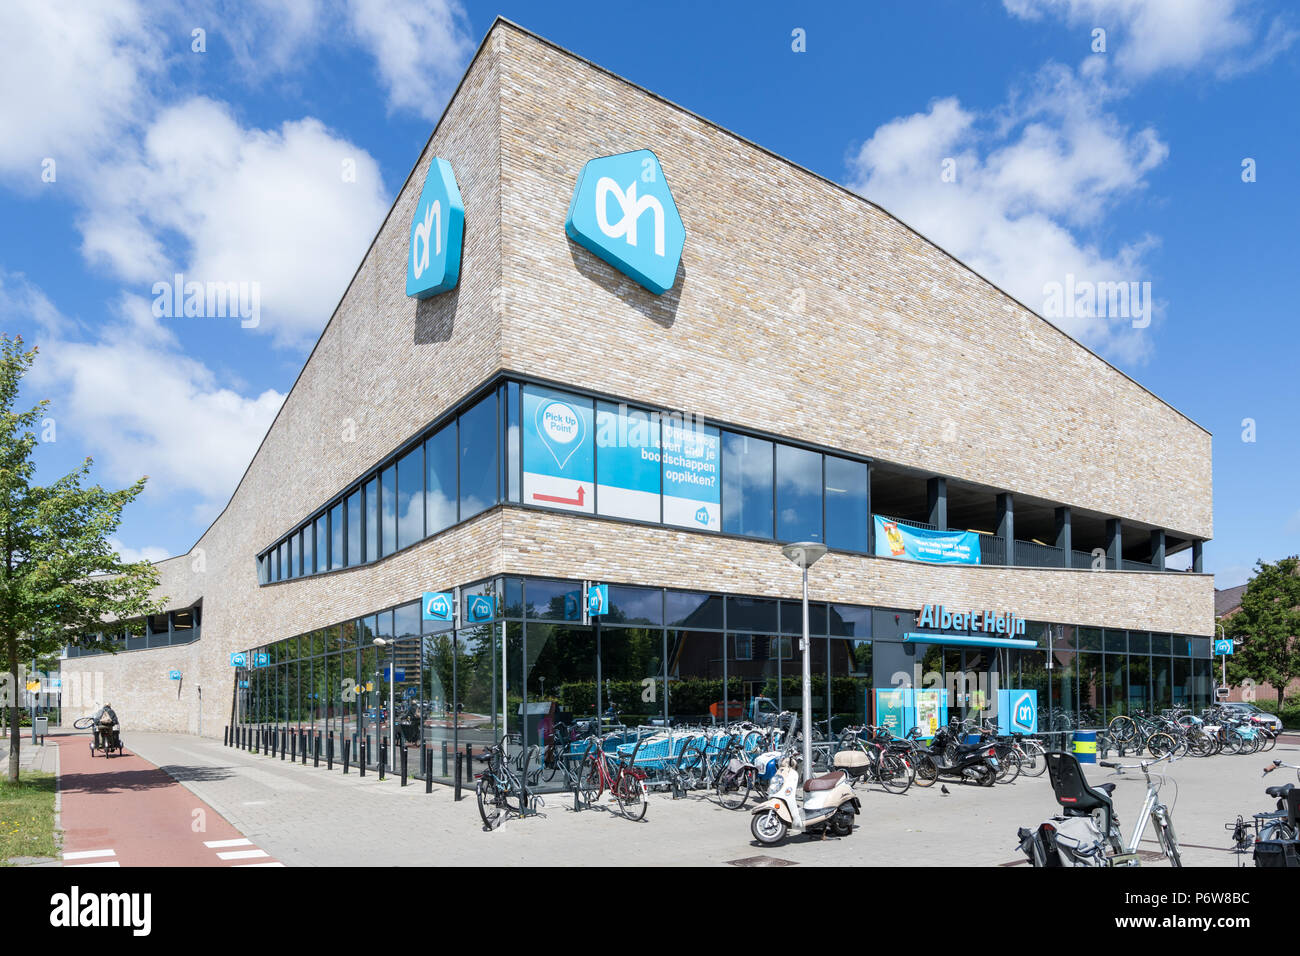 Albert heijn supermarket hi-res stock photography and images - Alamy